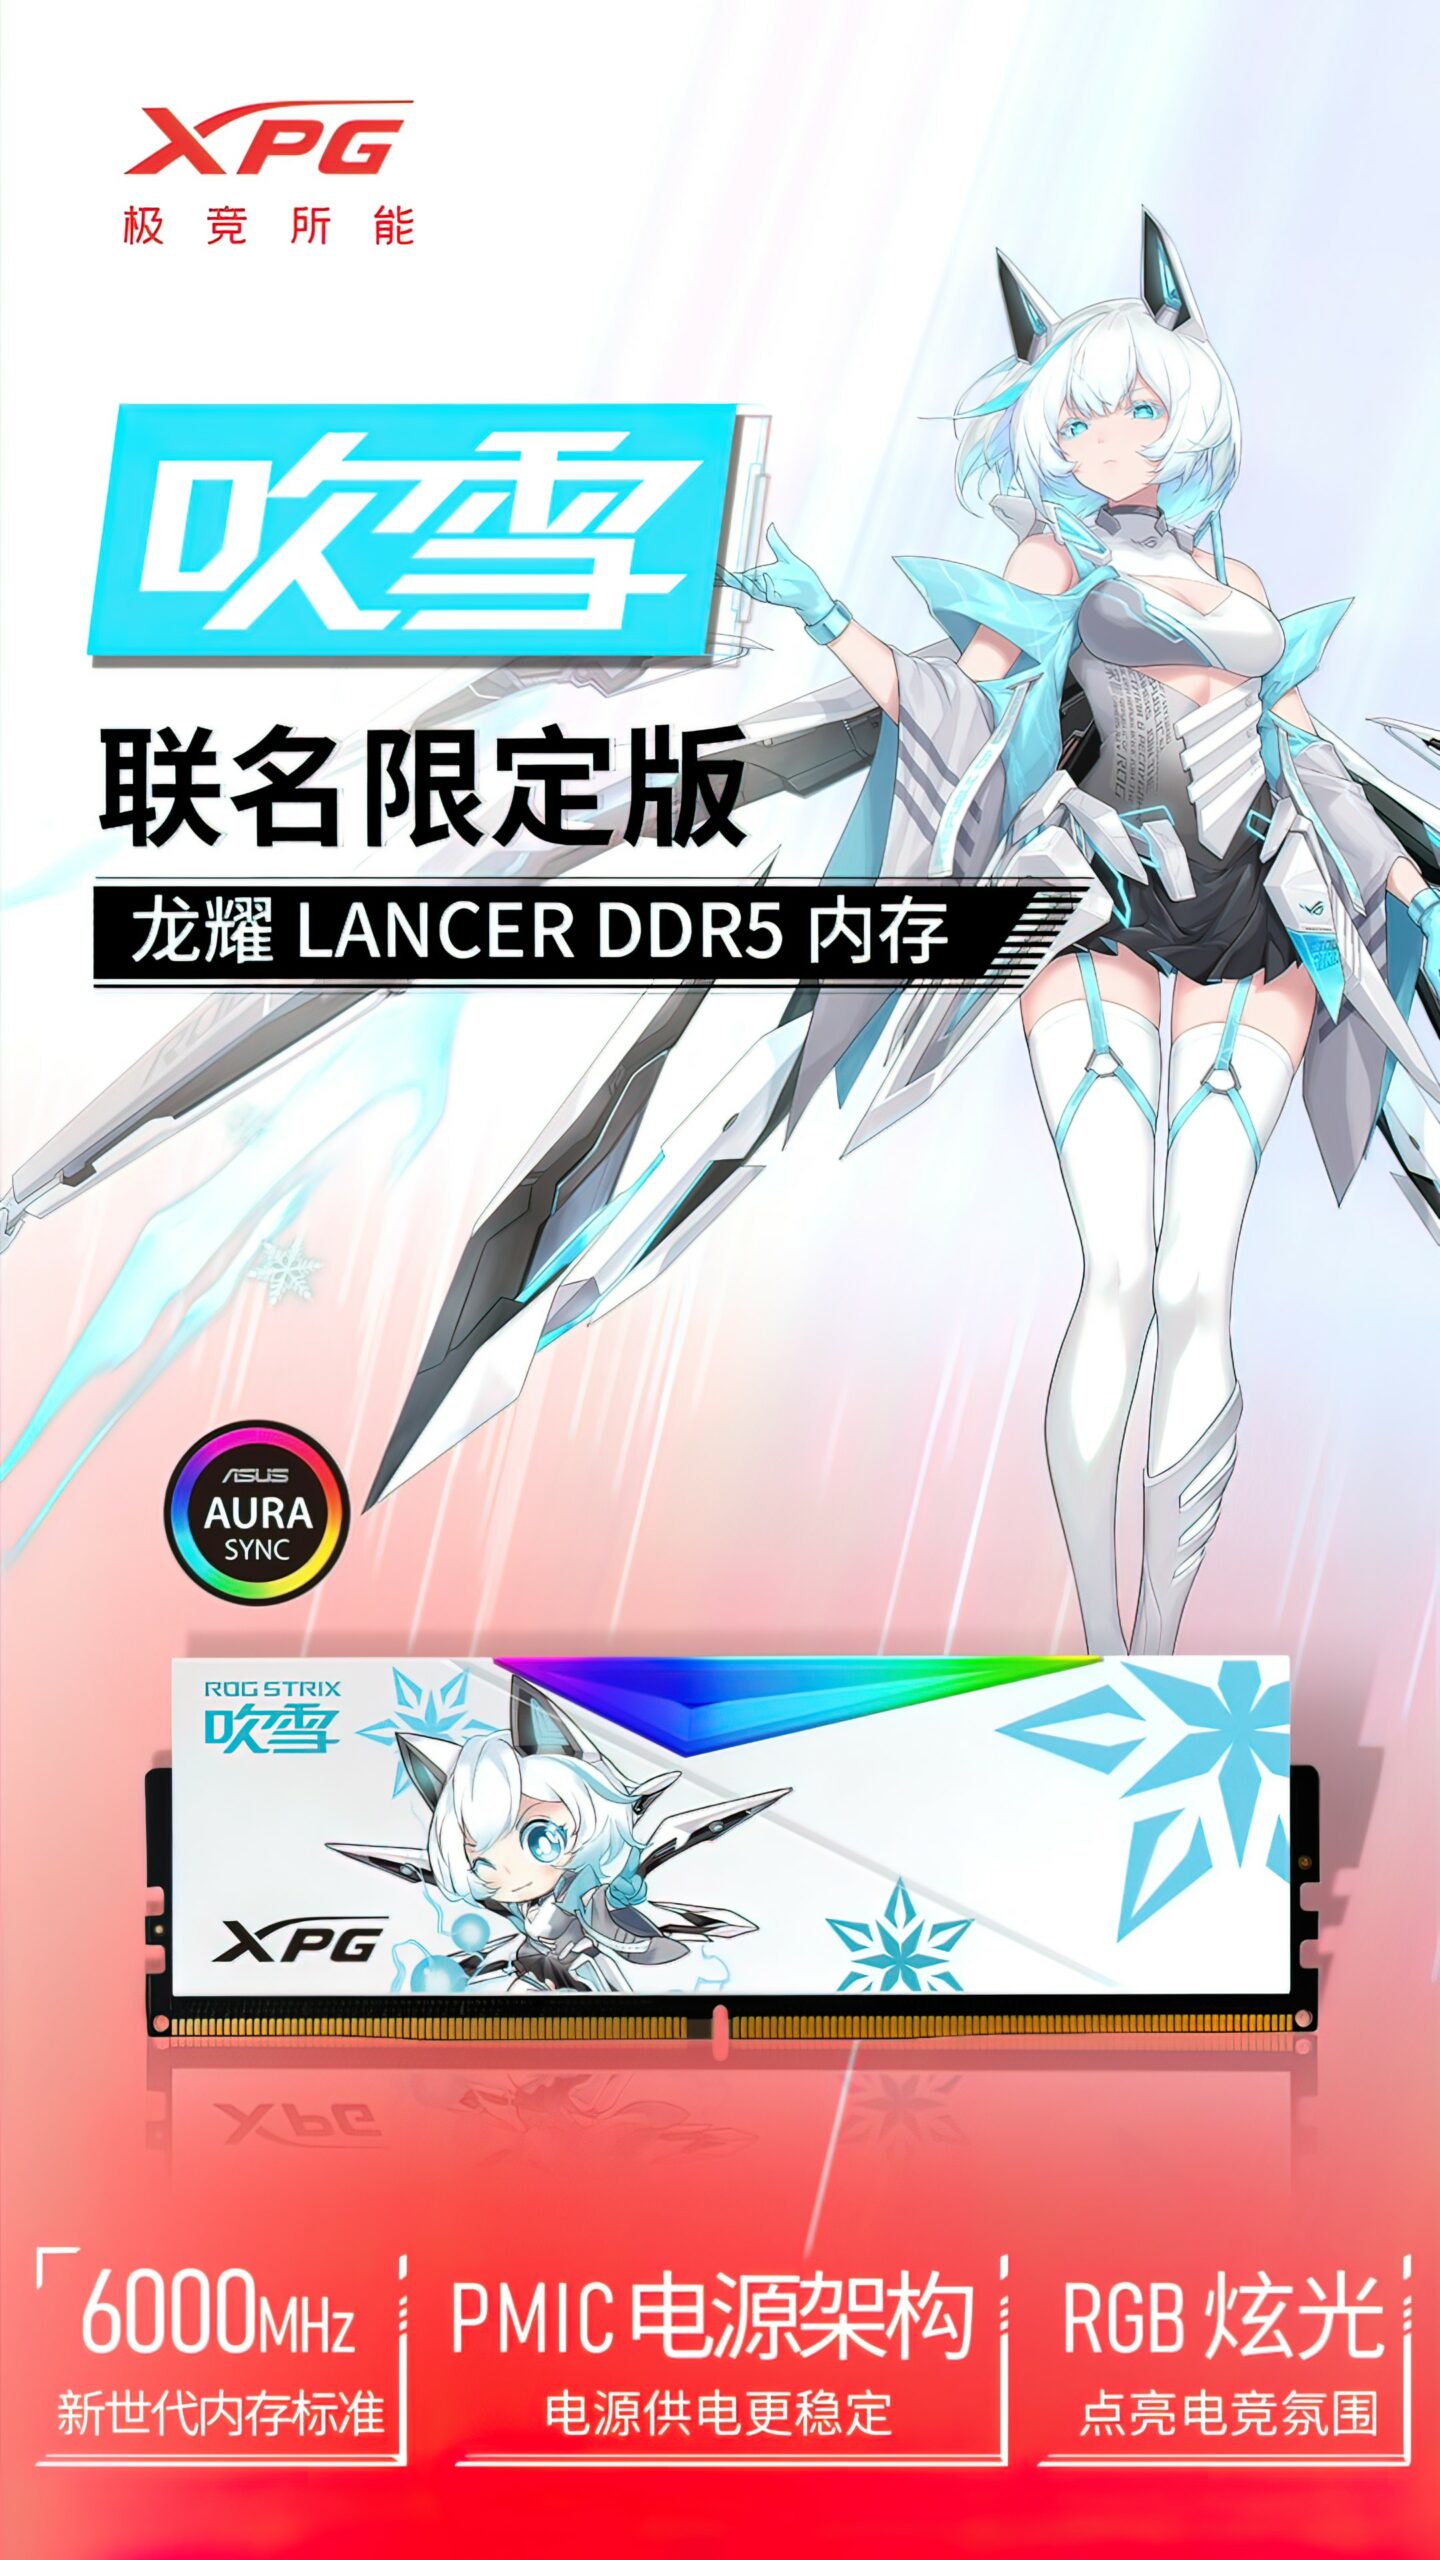 ADATA-XPG-ASUS-DDR5-Anime-Memory-_2-Custom-scaled.jpg